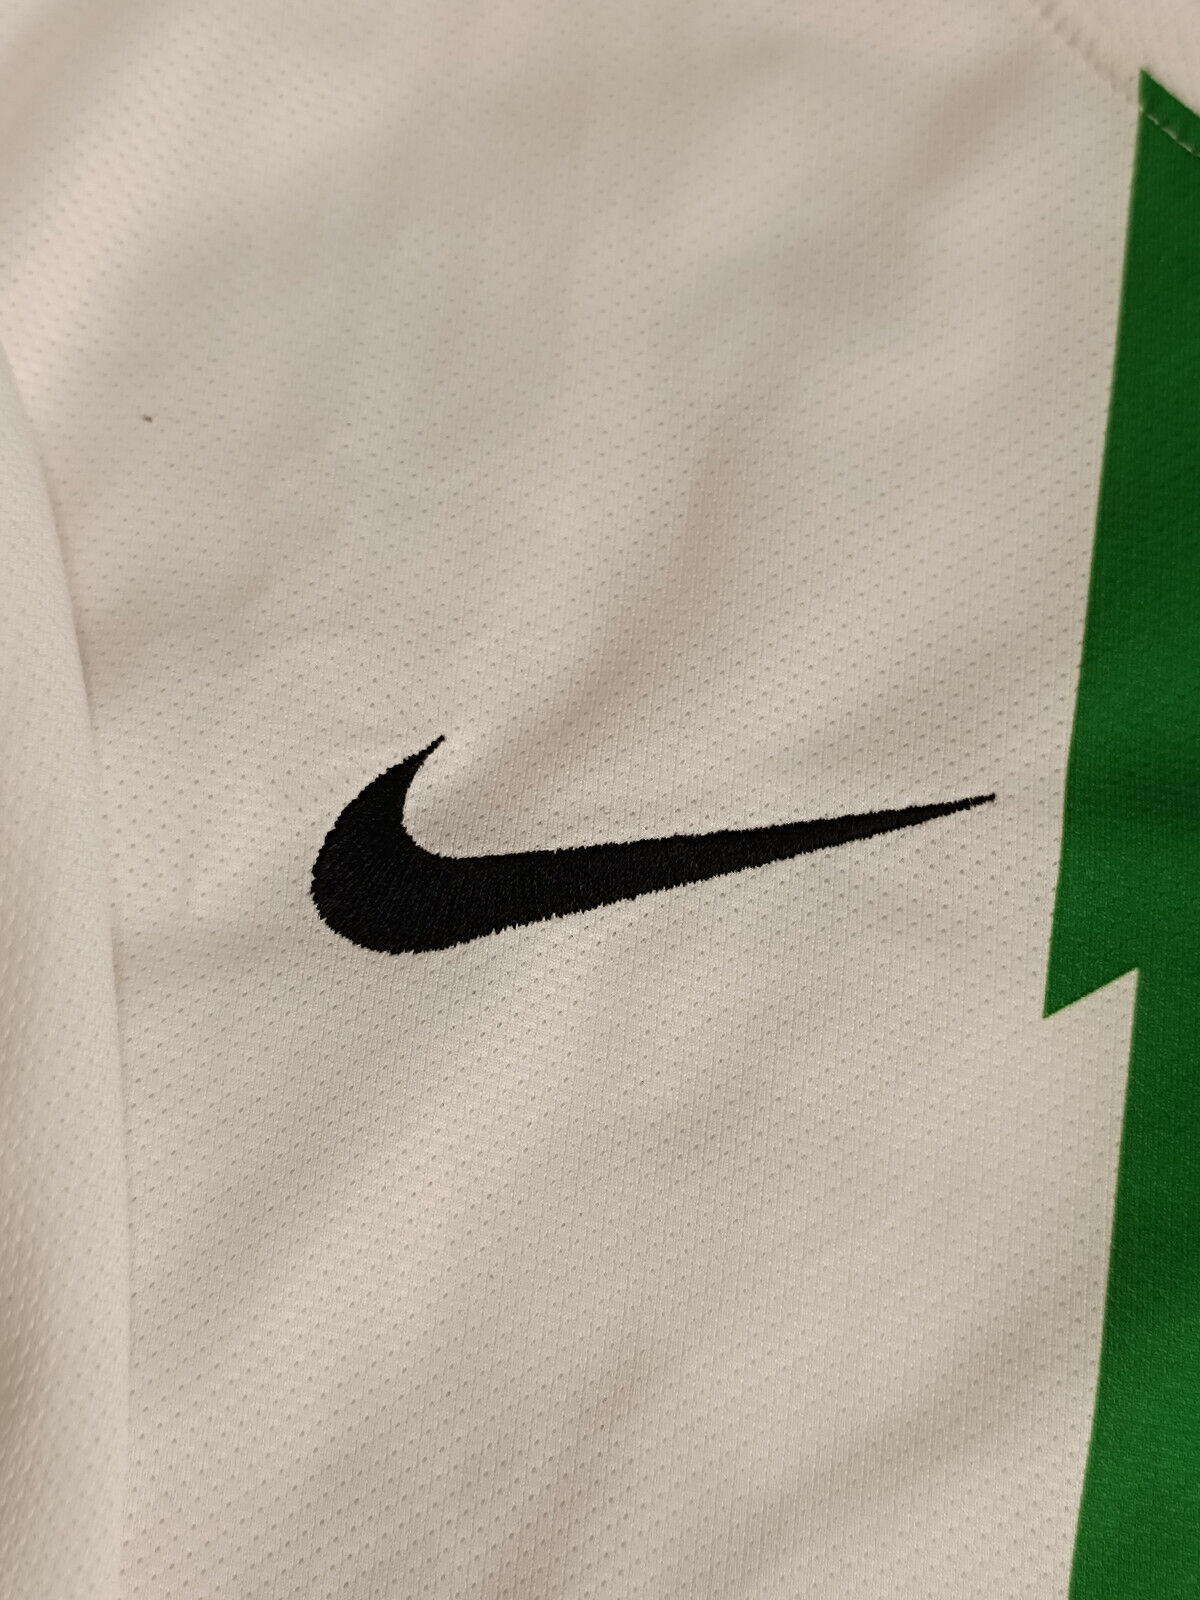 maglia calcio vintage Del Piero Juventus 2010 2011 Serie A Nike Balocco L UEFA